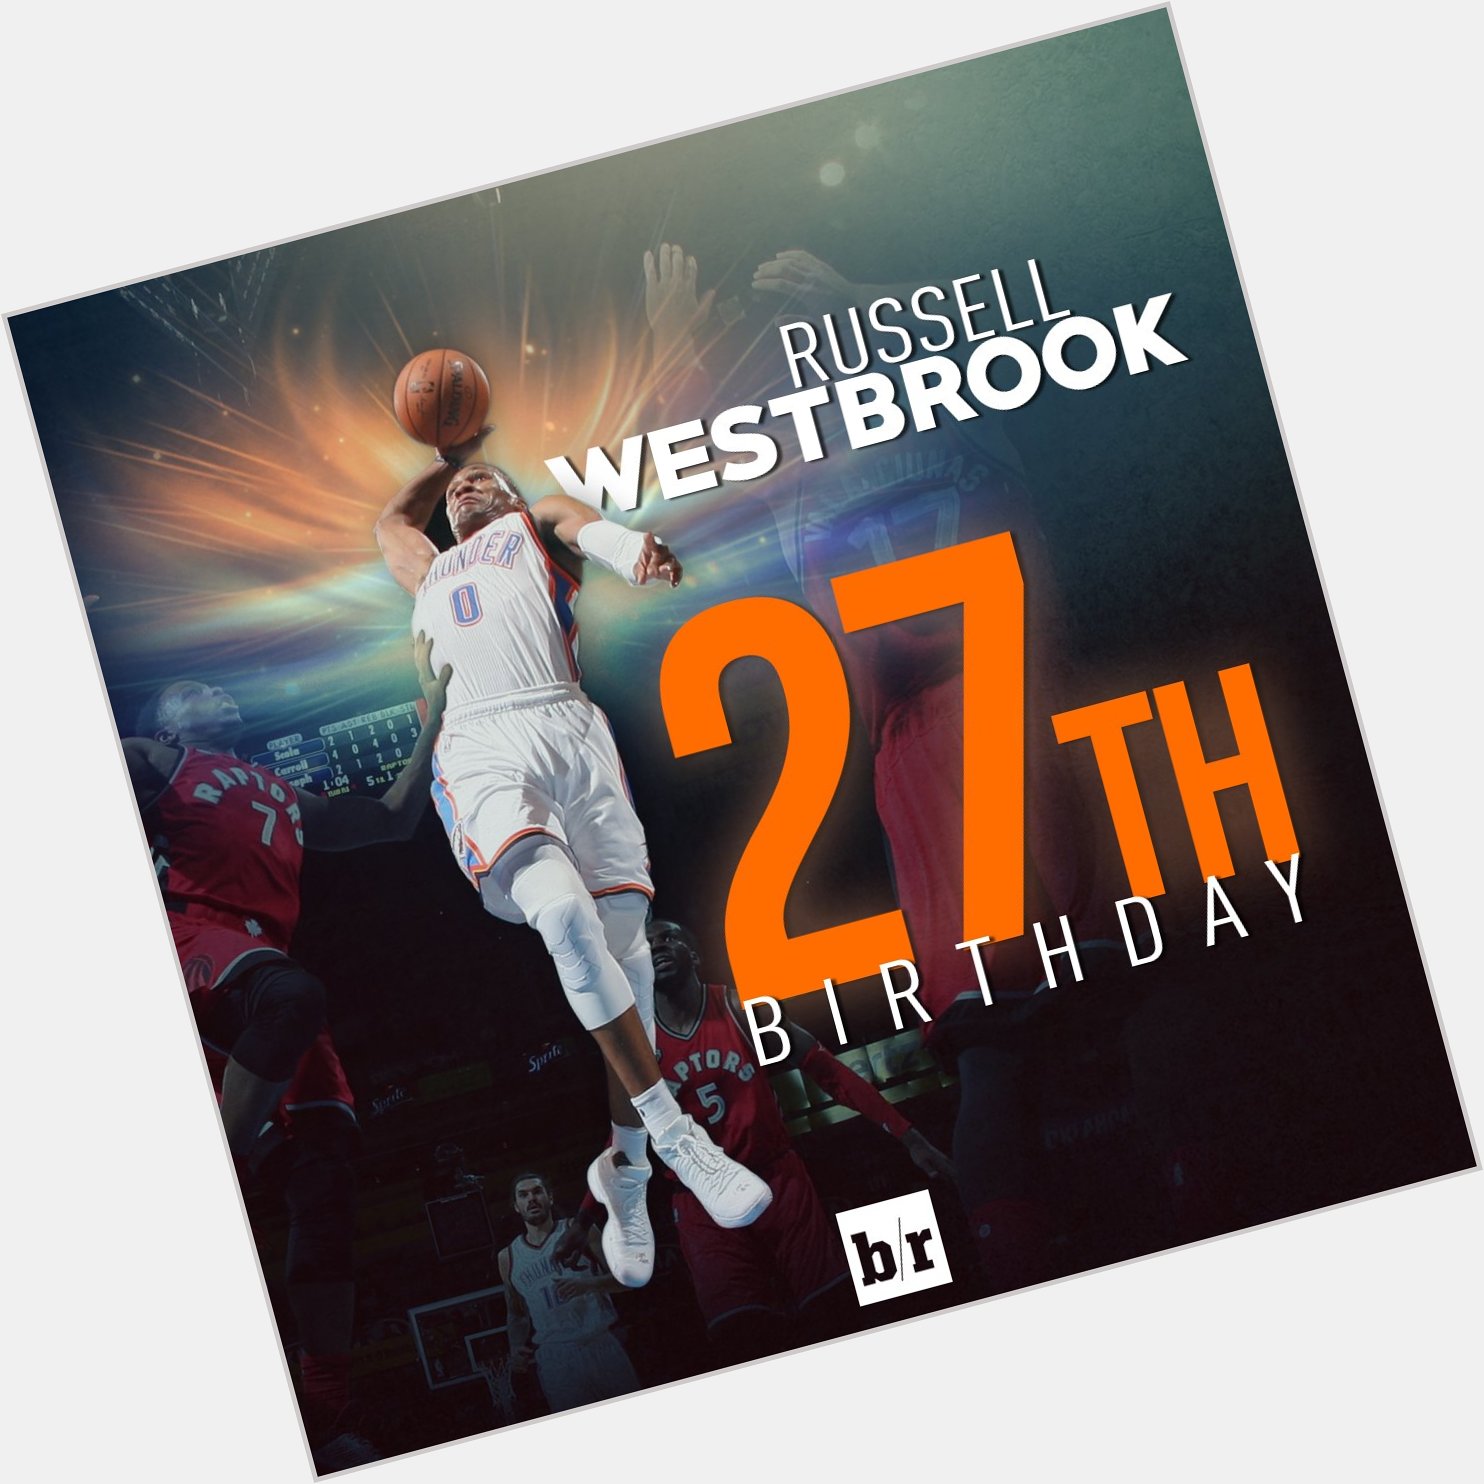 Happy birthday, Russell Westbrook! 